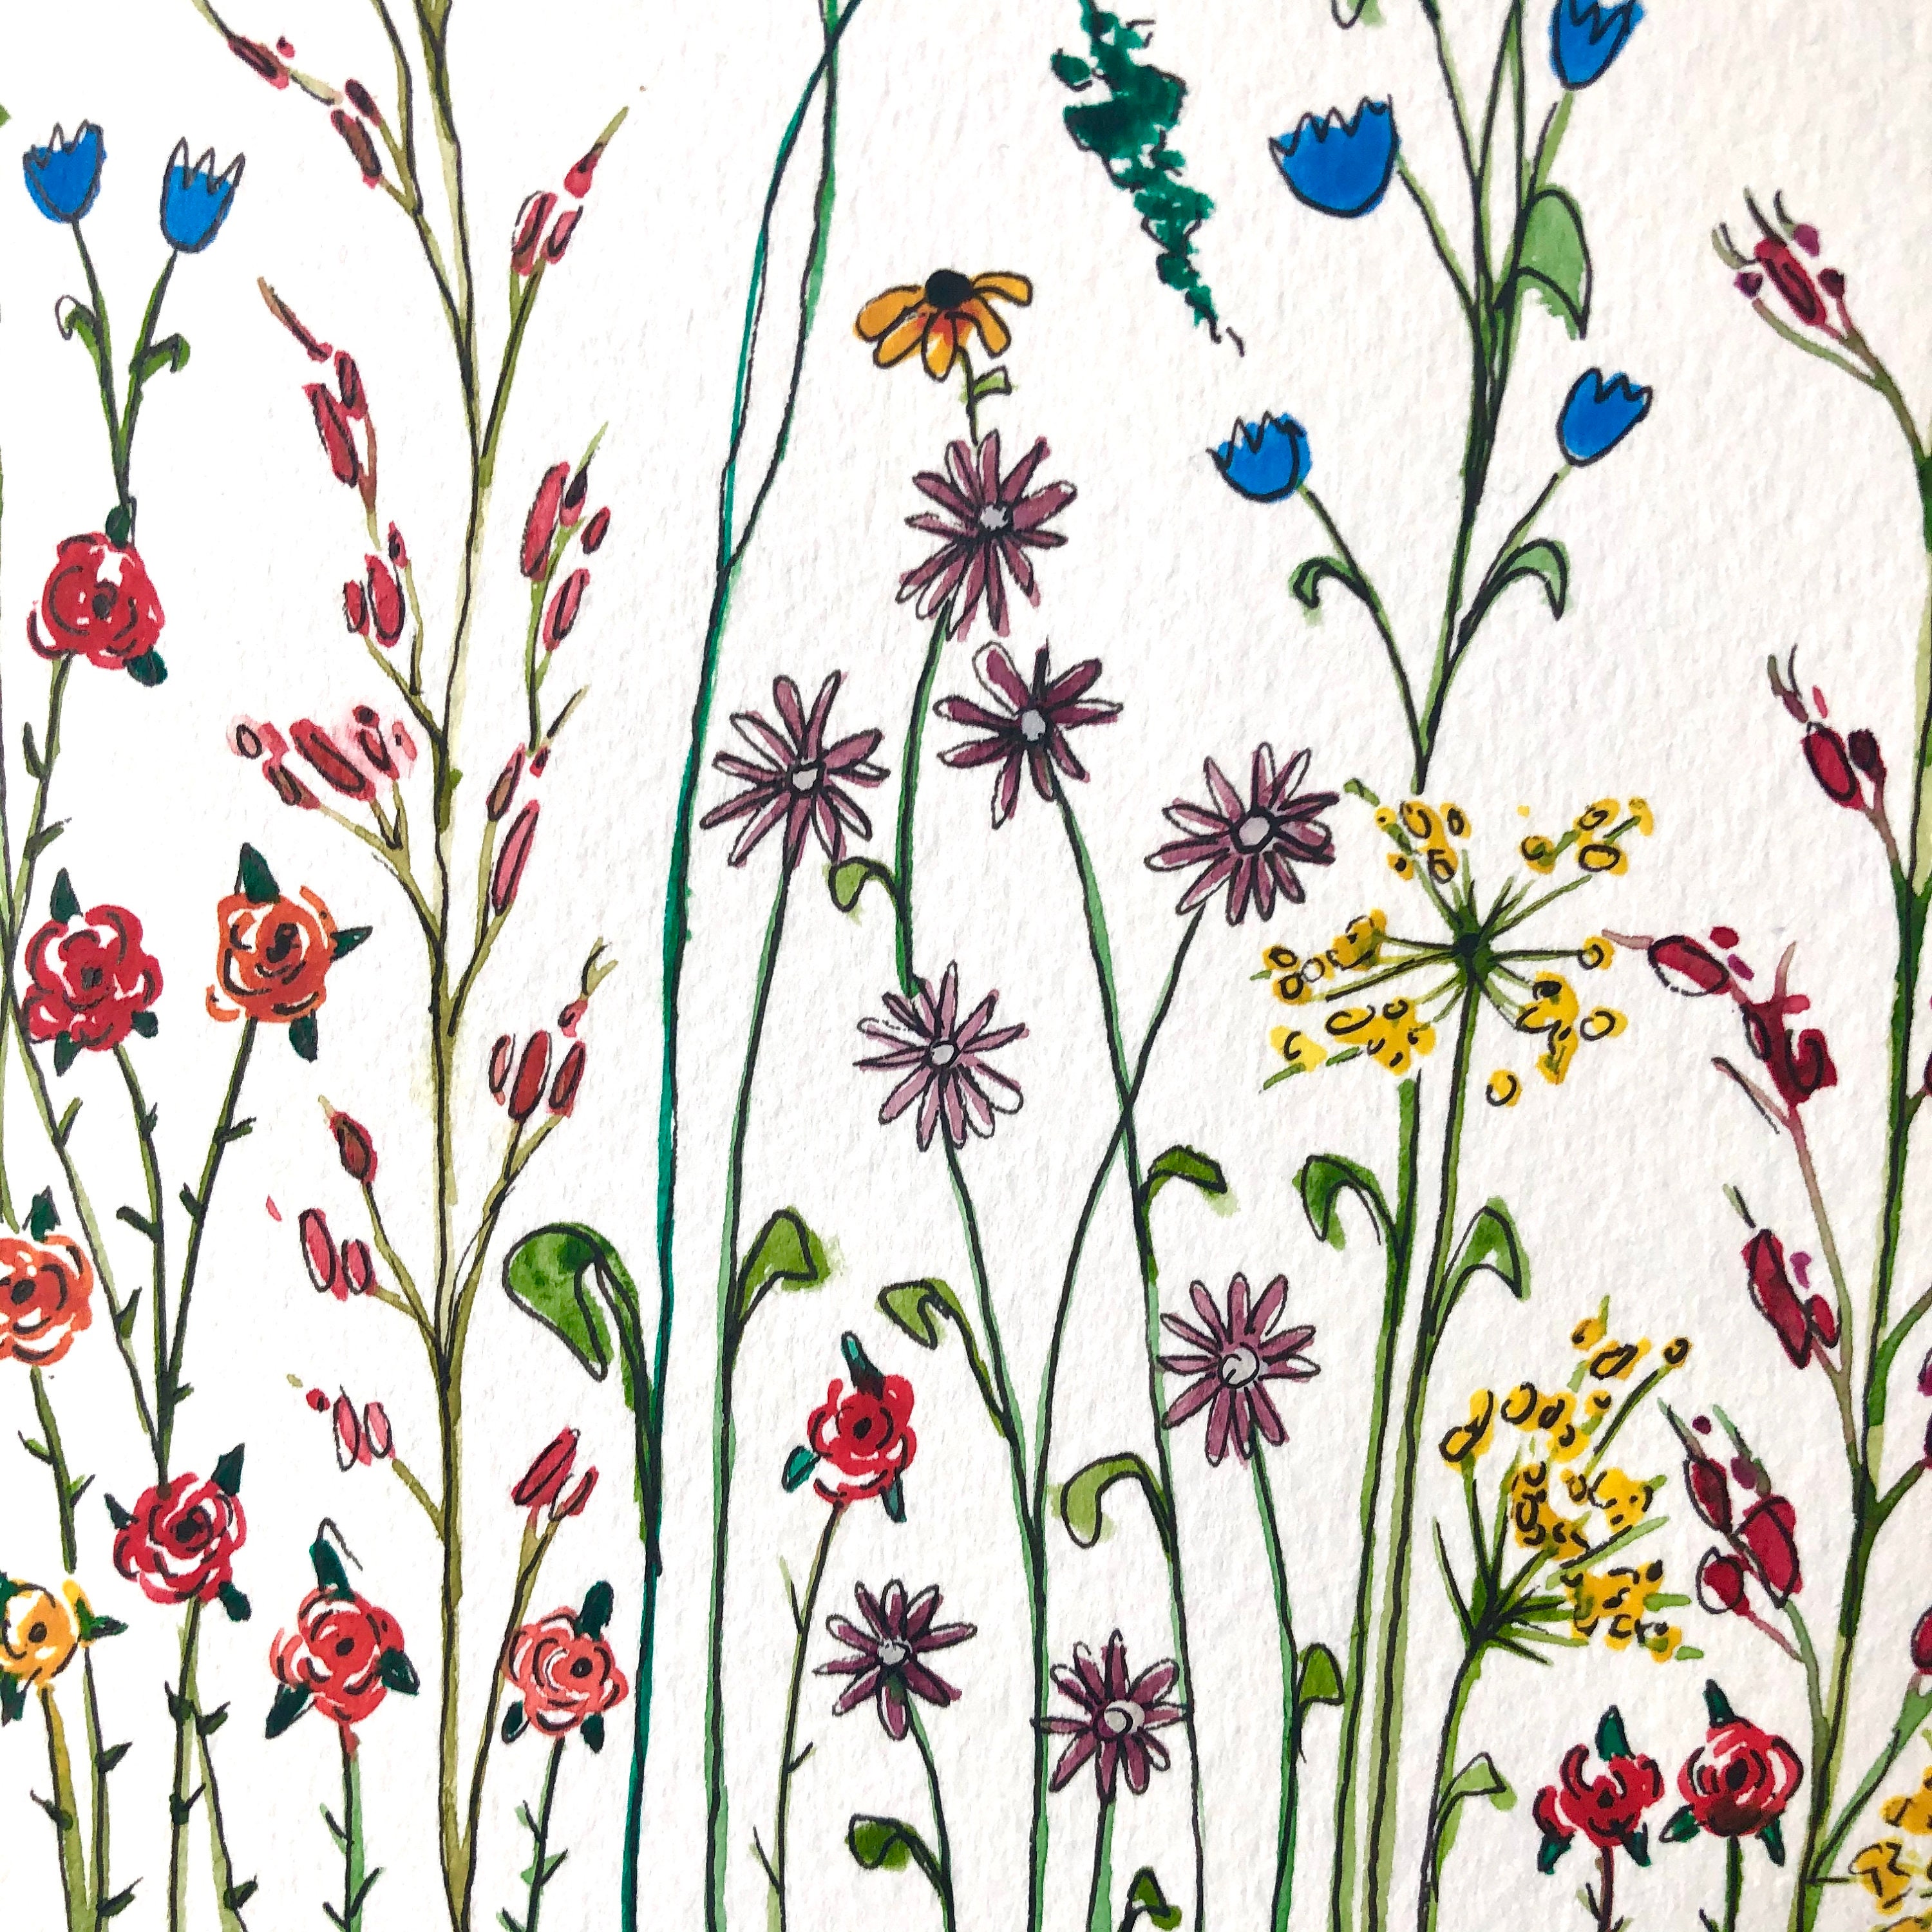 Original painting Watercolour wildflower meadow | Etsy